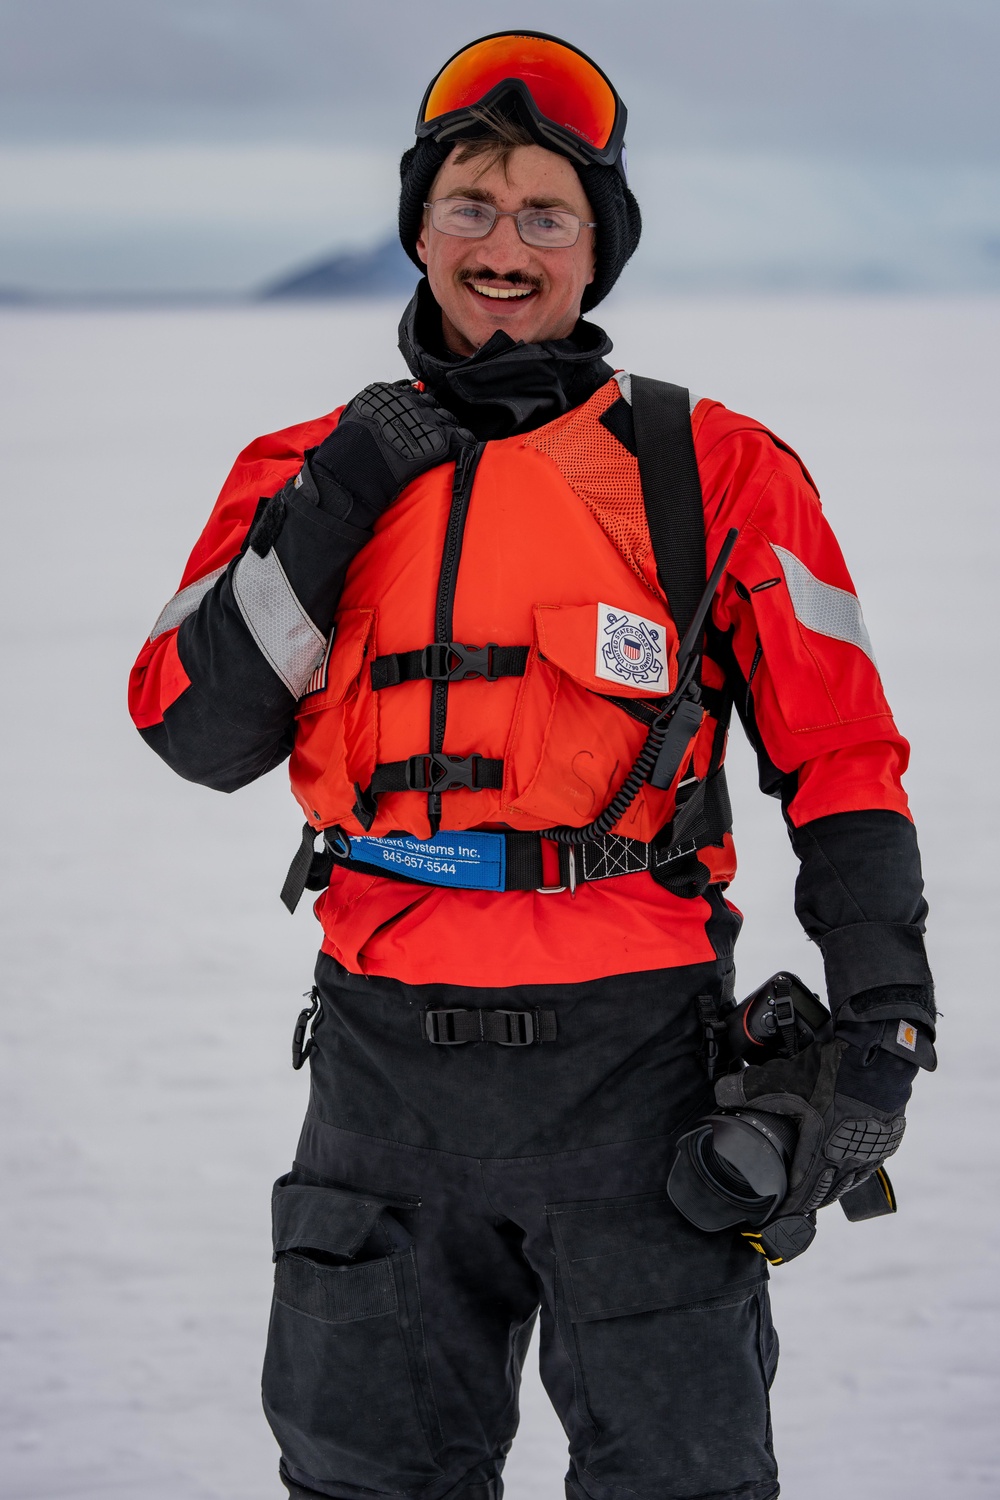 Coast Guard Cutter Polar Star (WAGB 10) conducts ice liberty in the McMurdo Sound